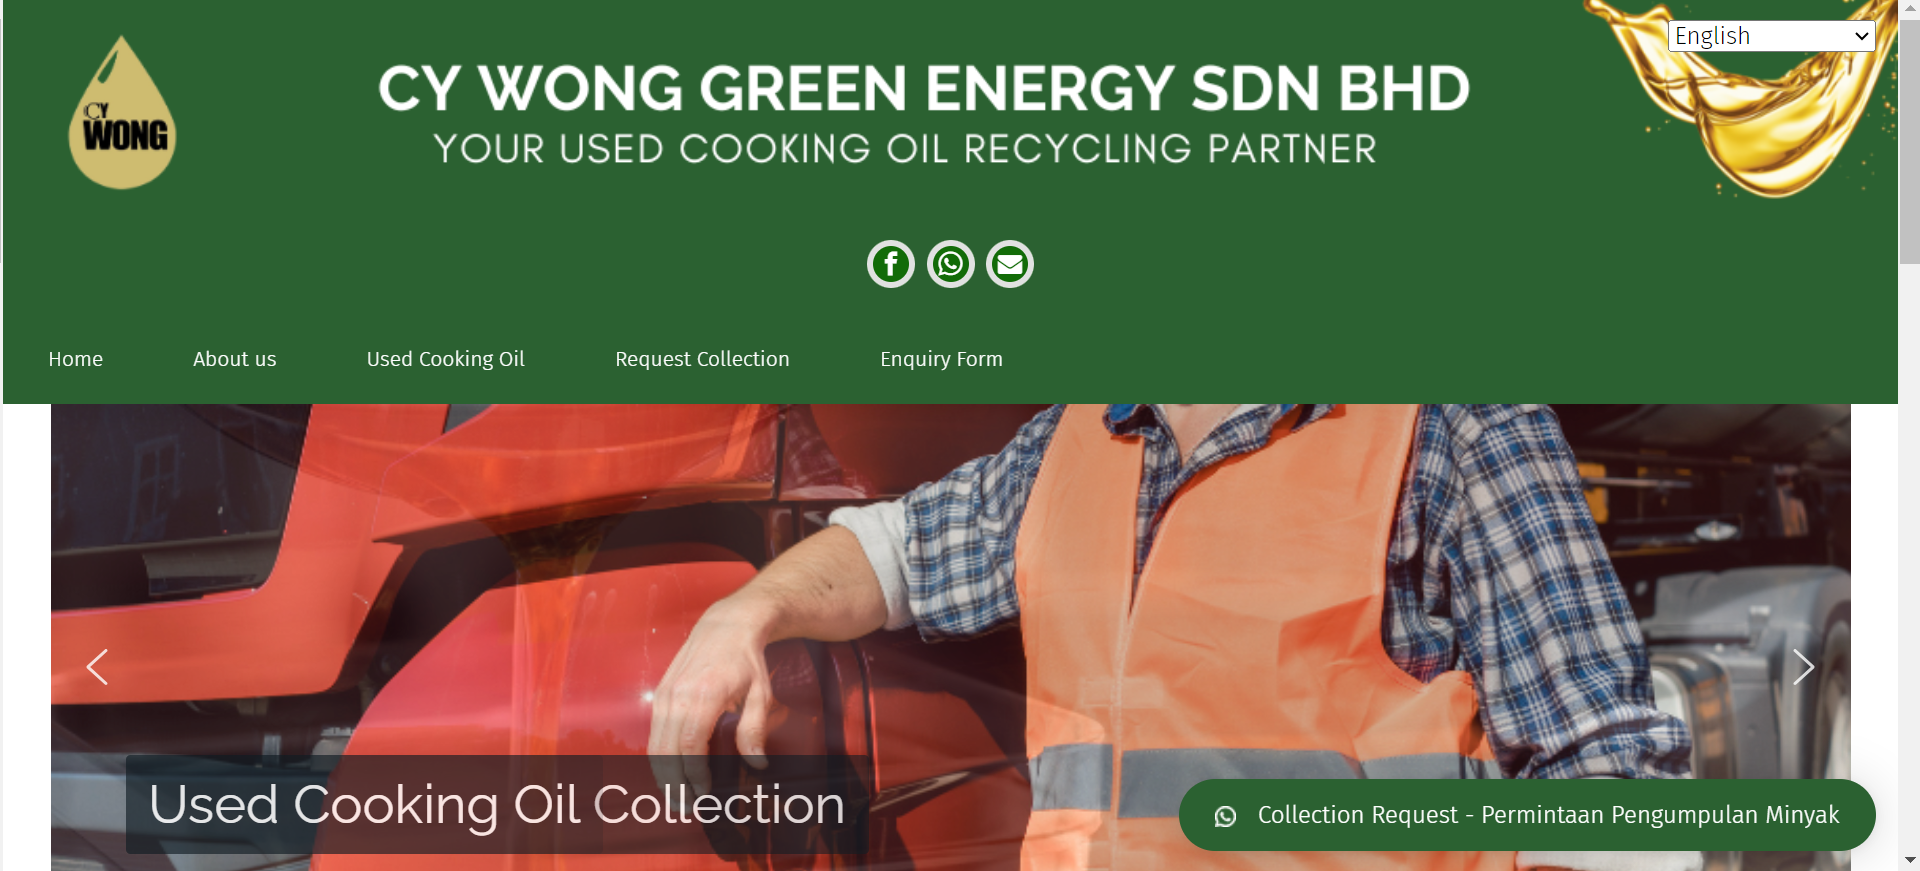 CY Wong Green Energy Sdn Bhd